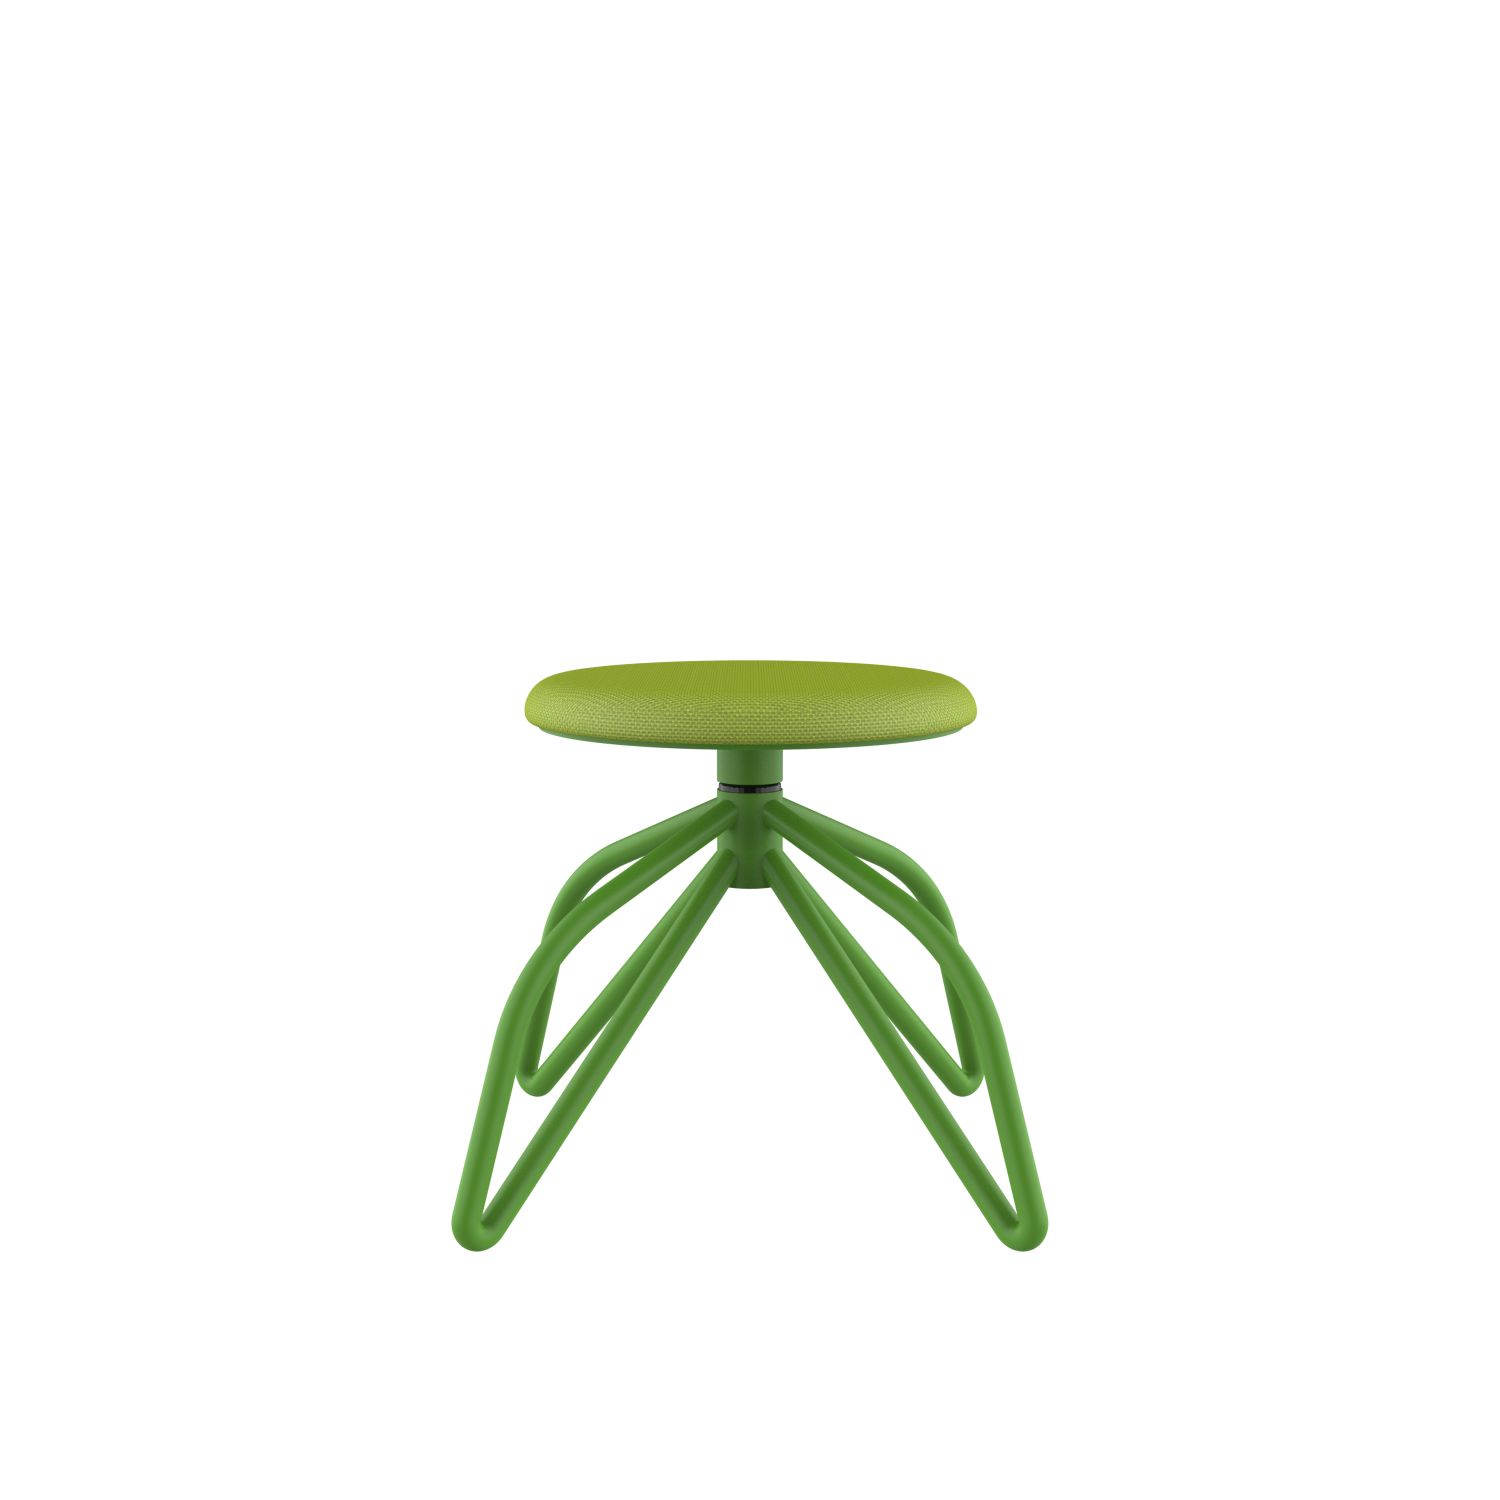 lensvelt powerhouse company coquille stool fairway green 020 yellow green ral6018 hard leg ends